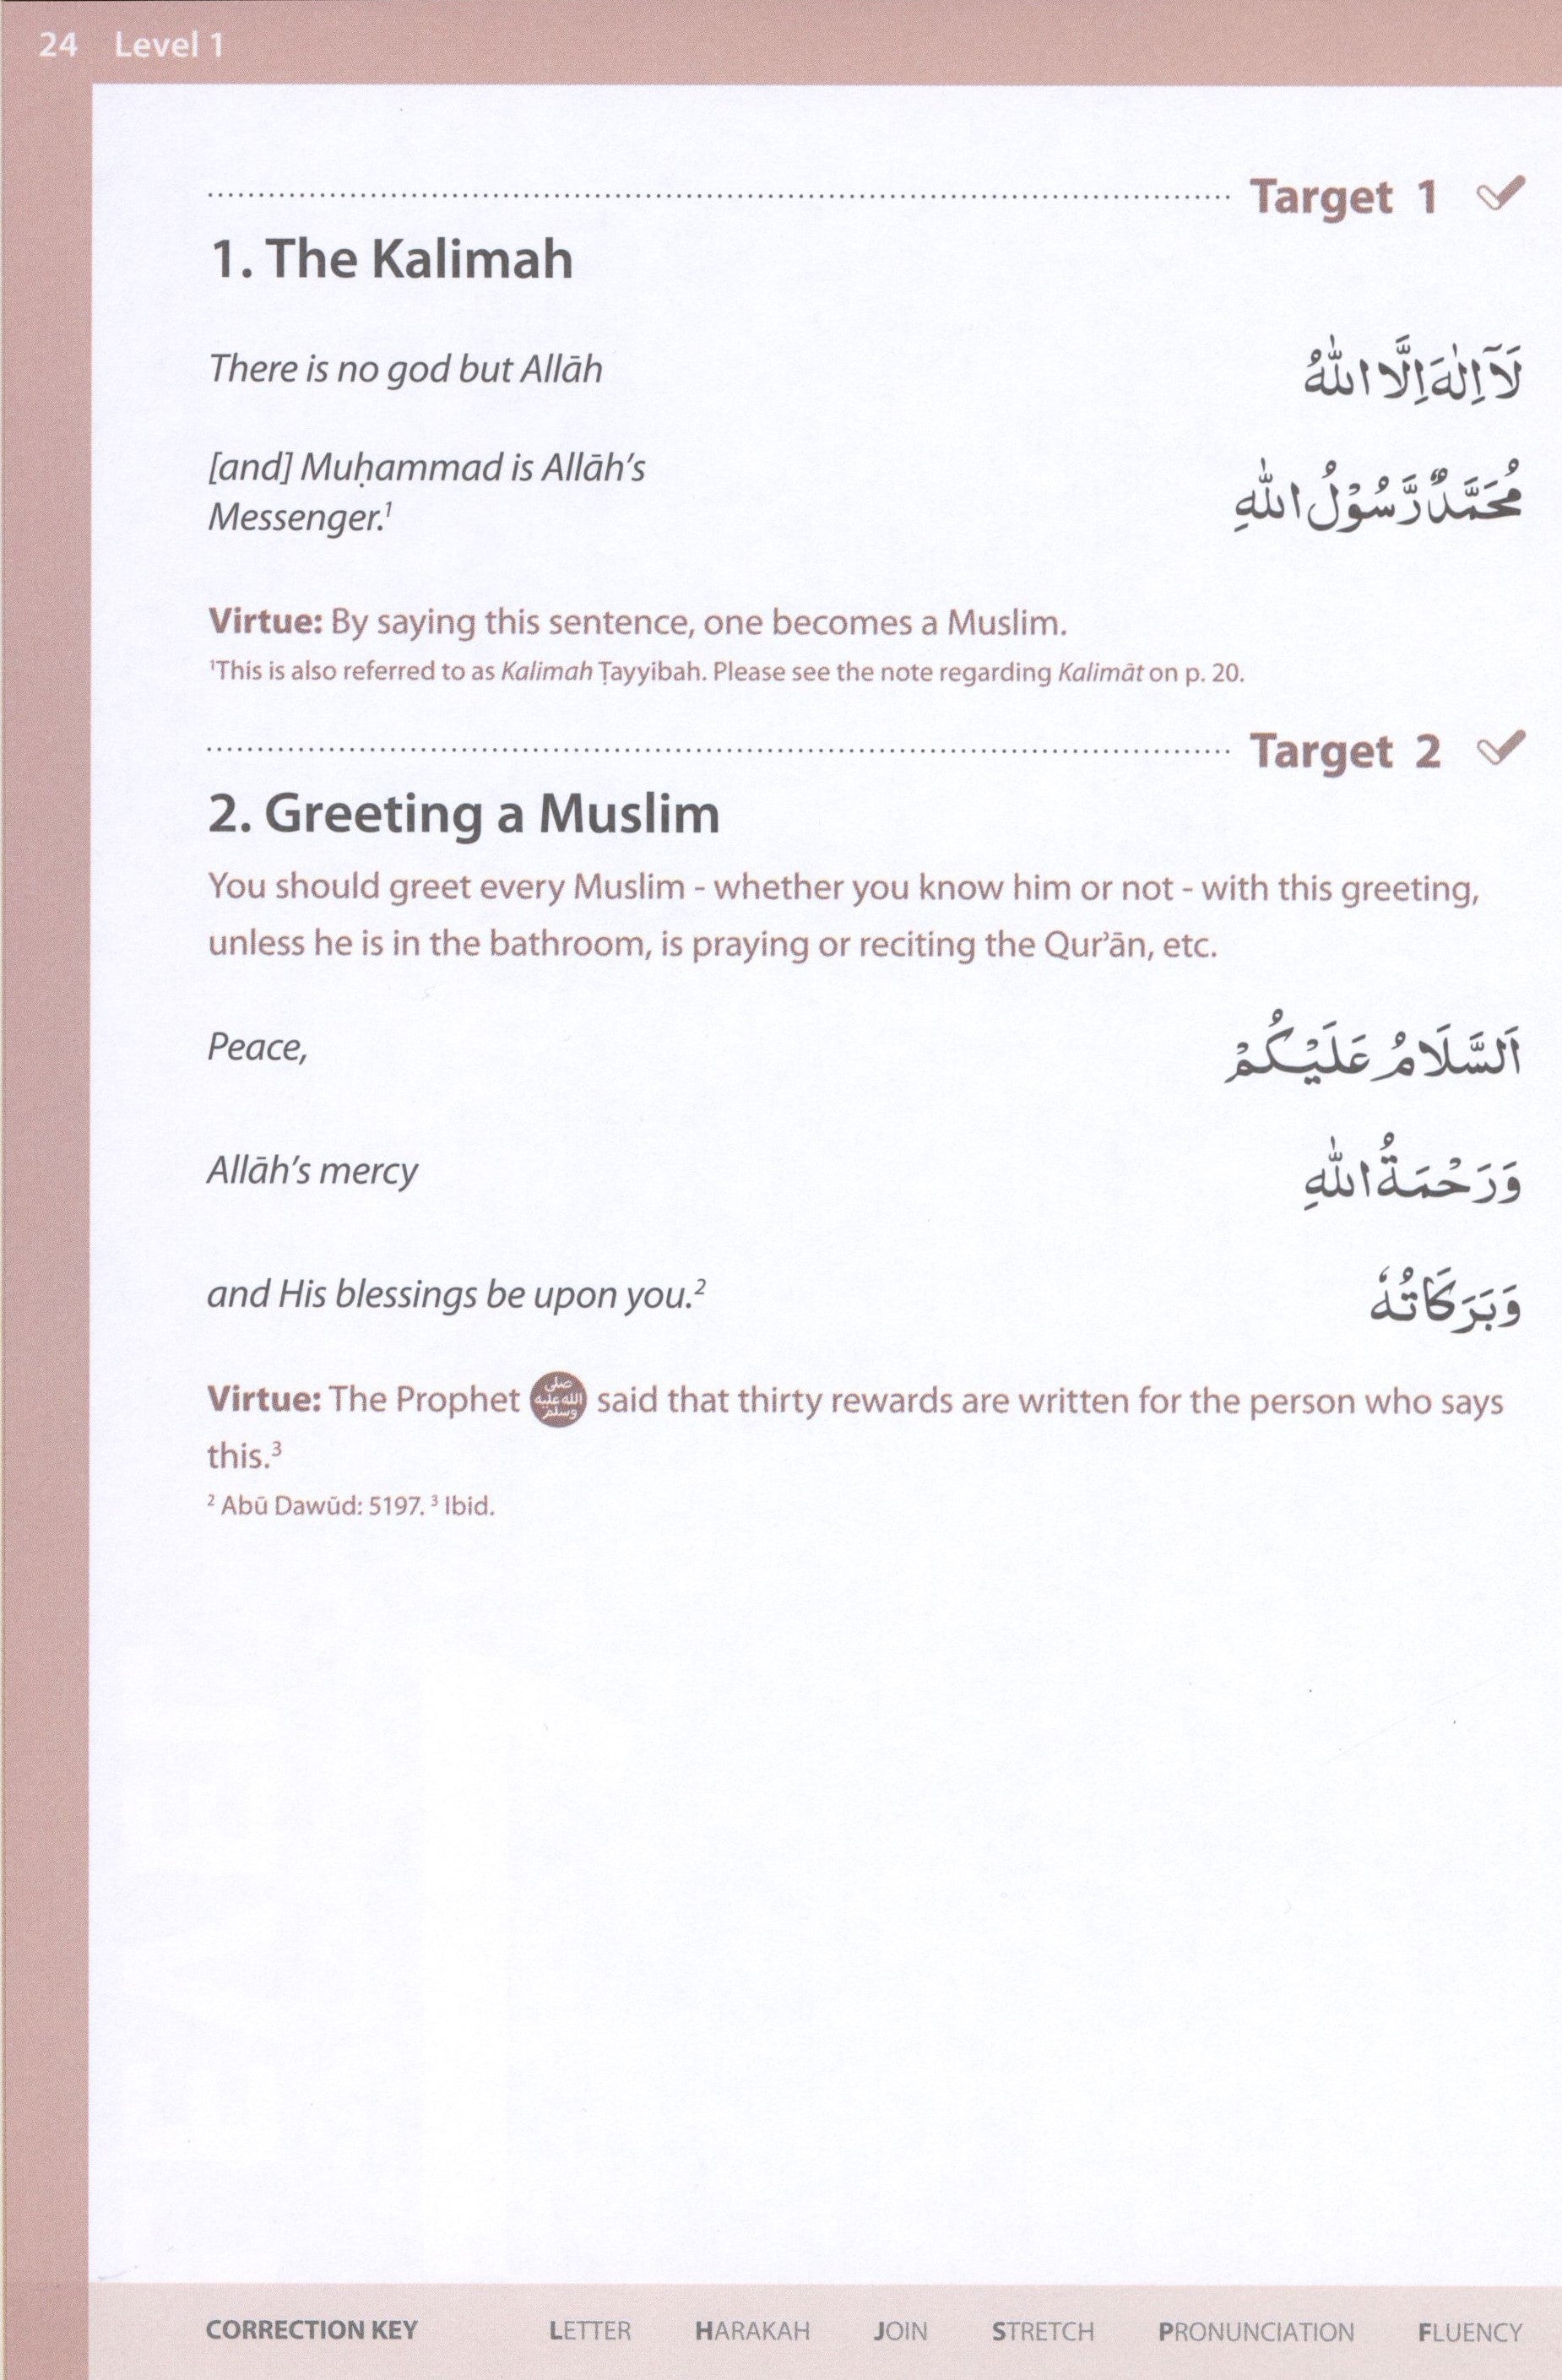 Essential Duas and Surahs Book 1 (Urdu Script)